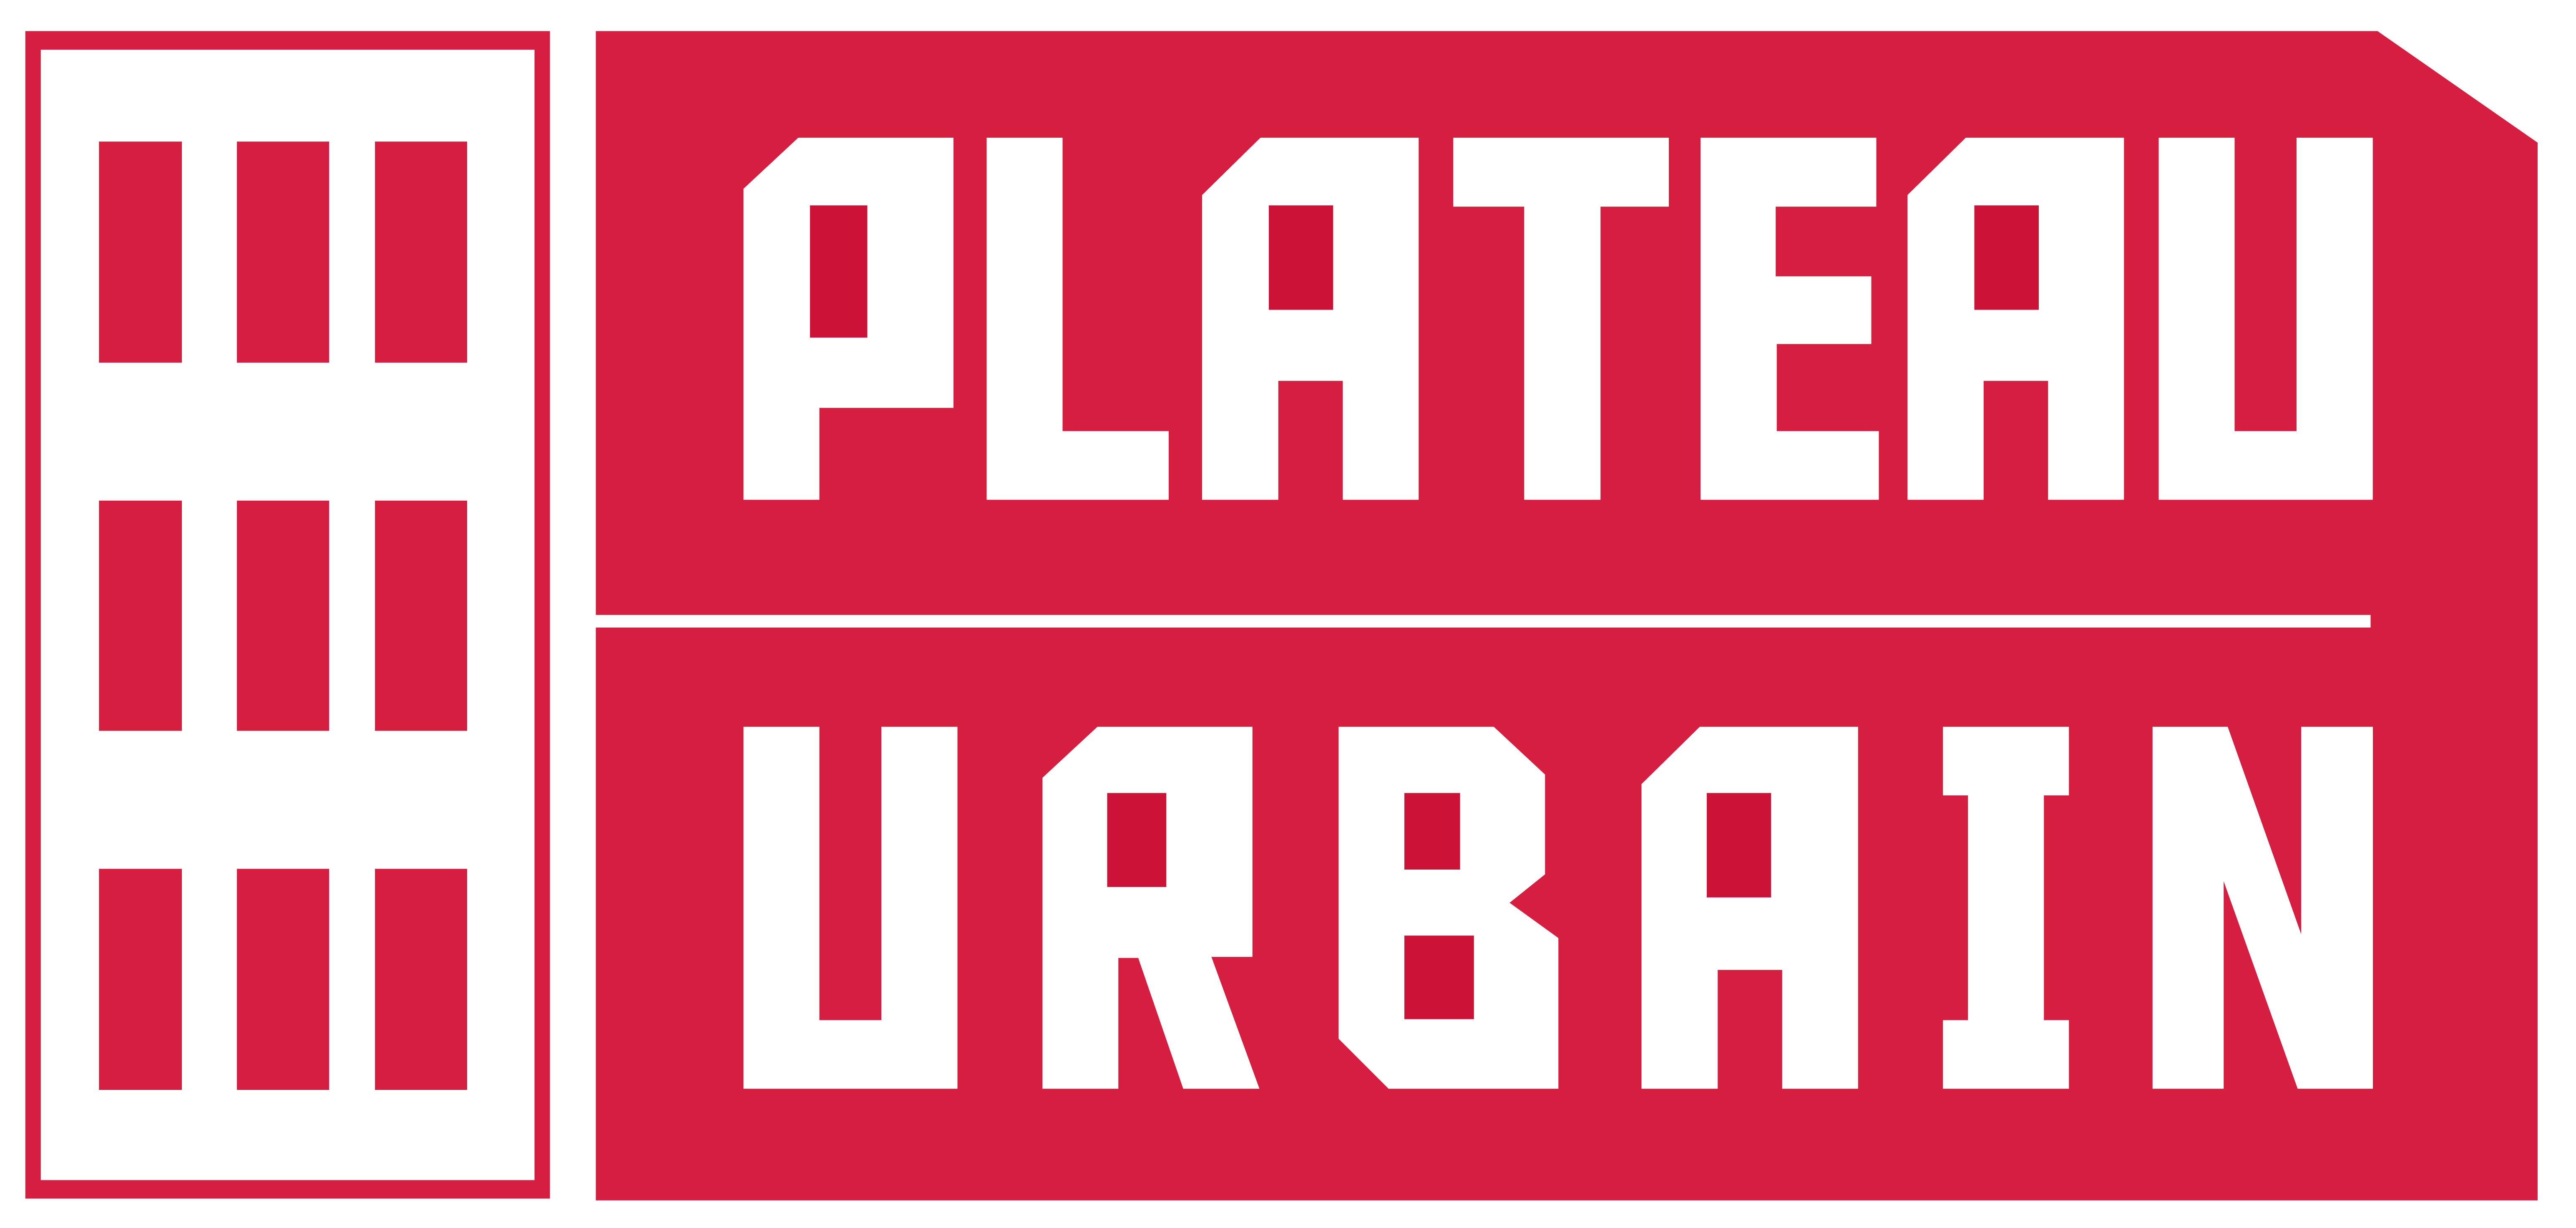 Plateau Urbain | urbanisme transitoire & immobilier solidaire